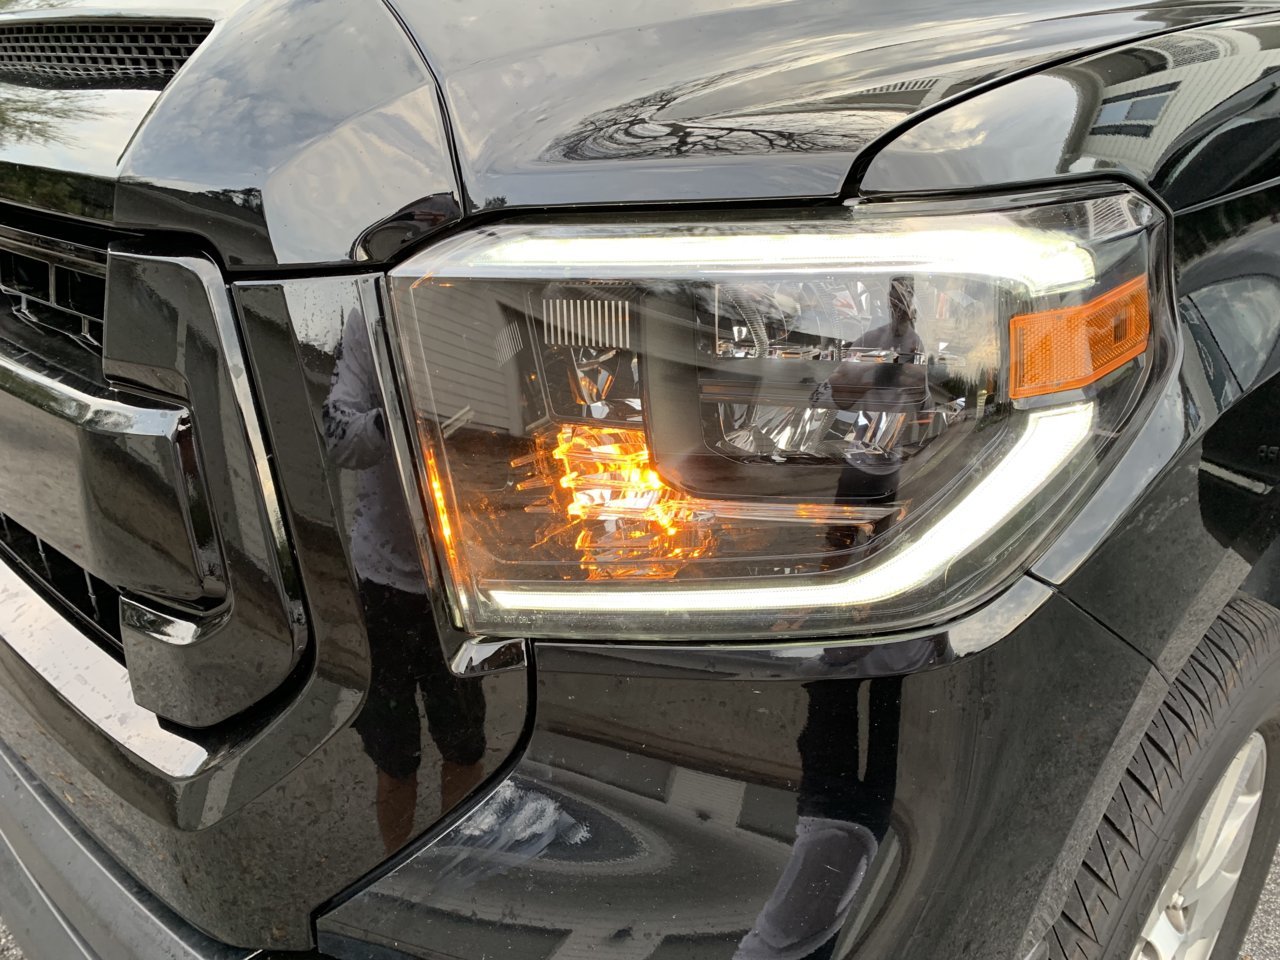 LED Turn Signal Issues | Toyota Tundra Forum